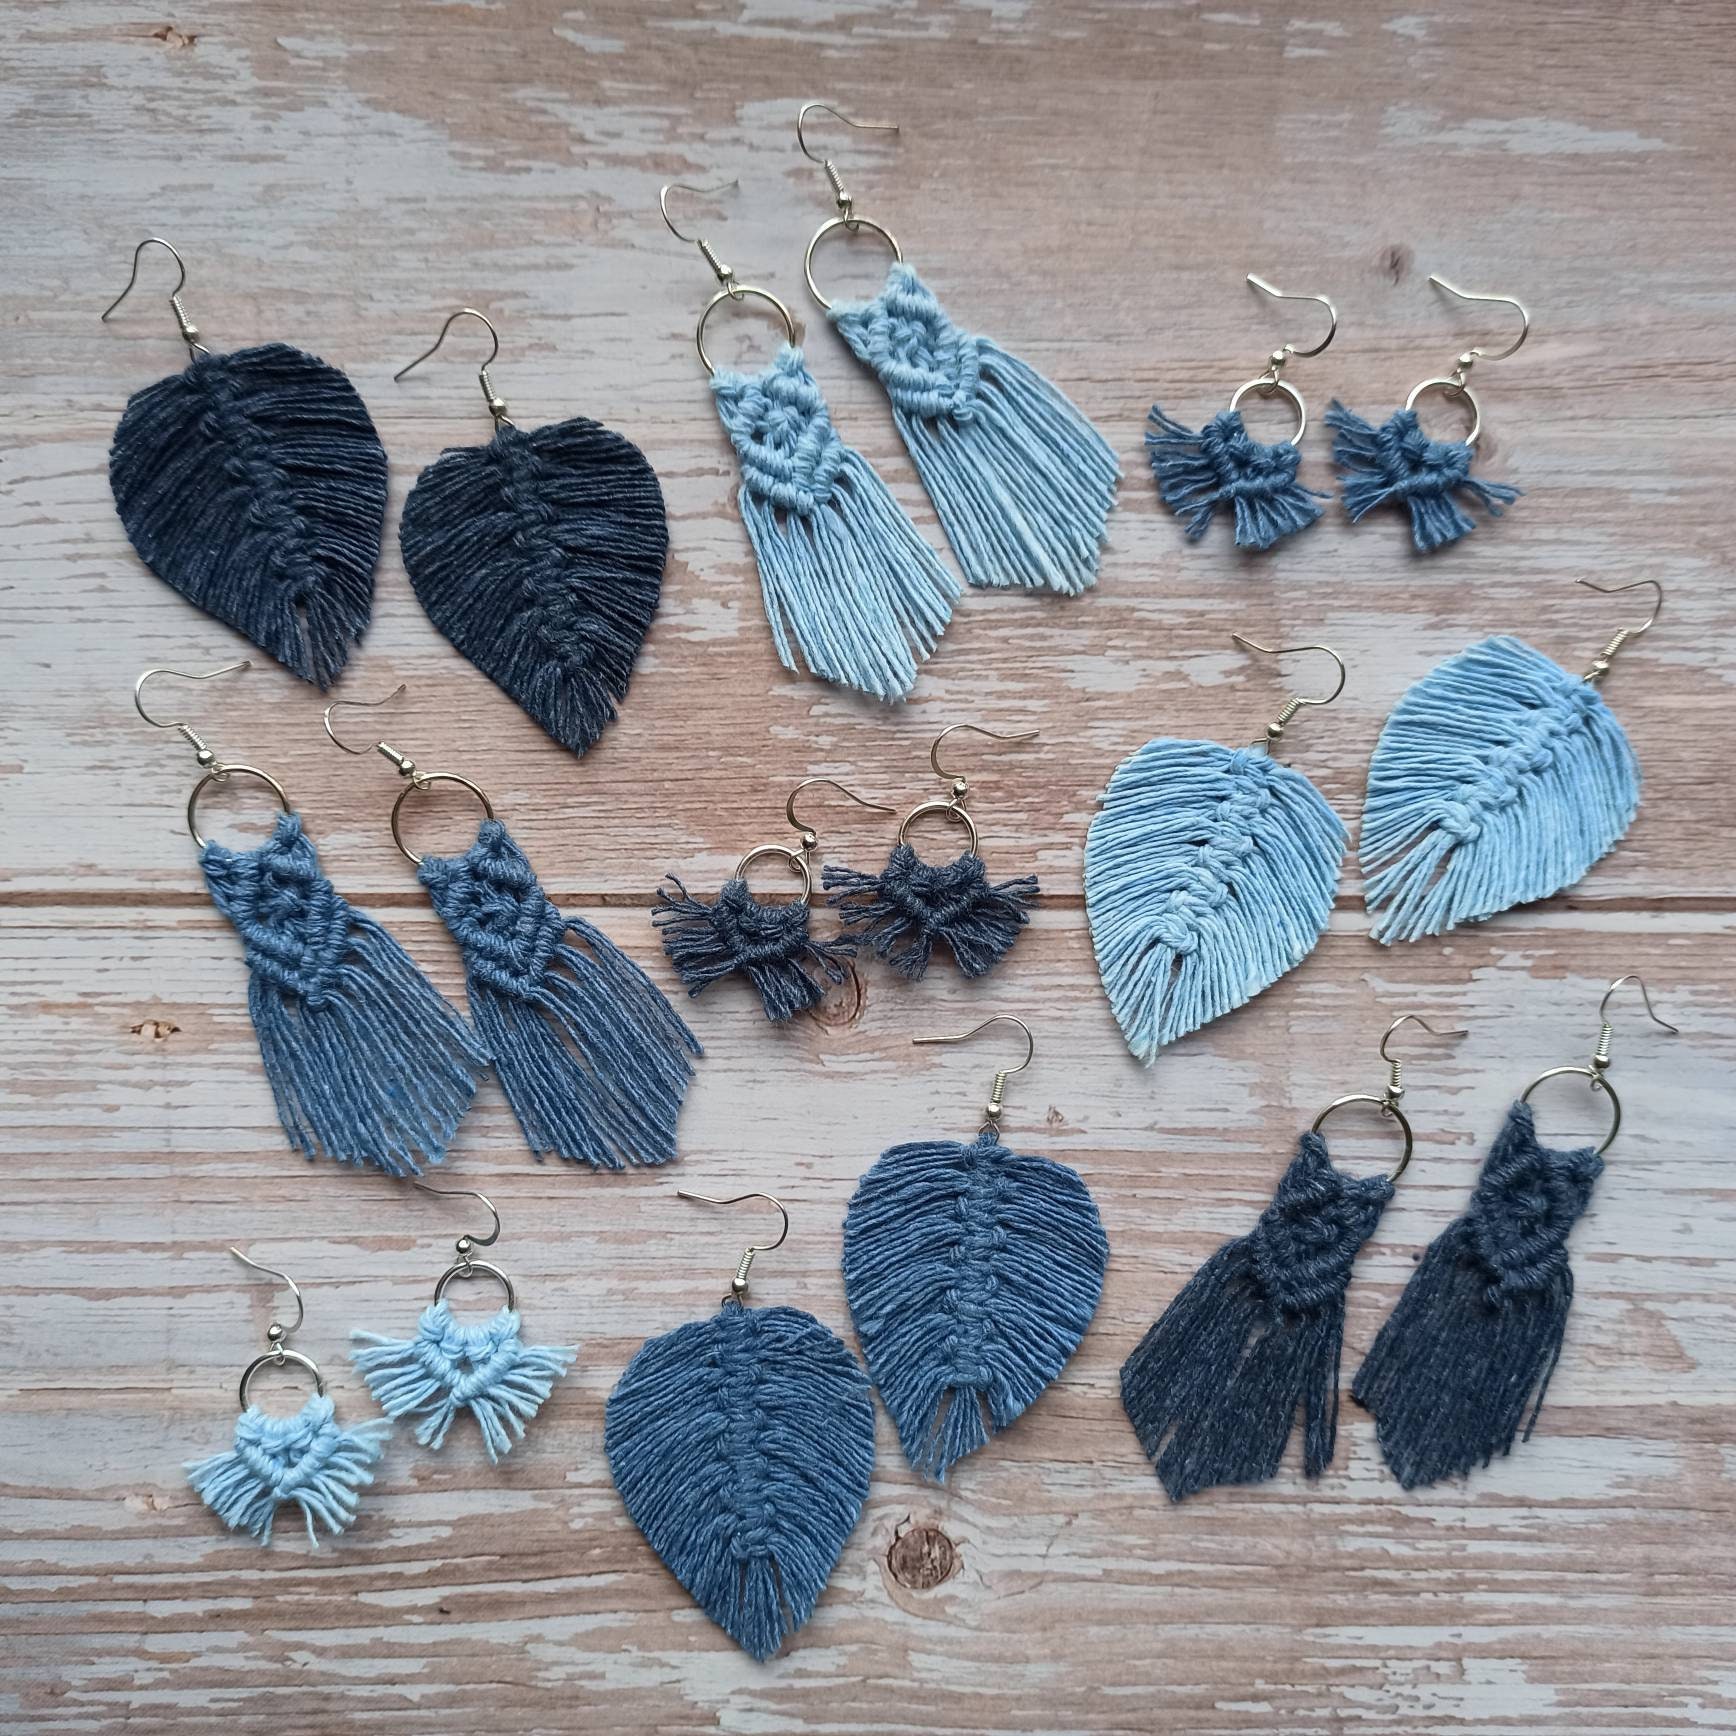 Blue Glass Leaf Copper Boho Dangle Earrings with Niobium Ear wires - Iris  Elm Jewelry & Soap